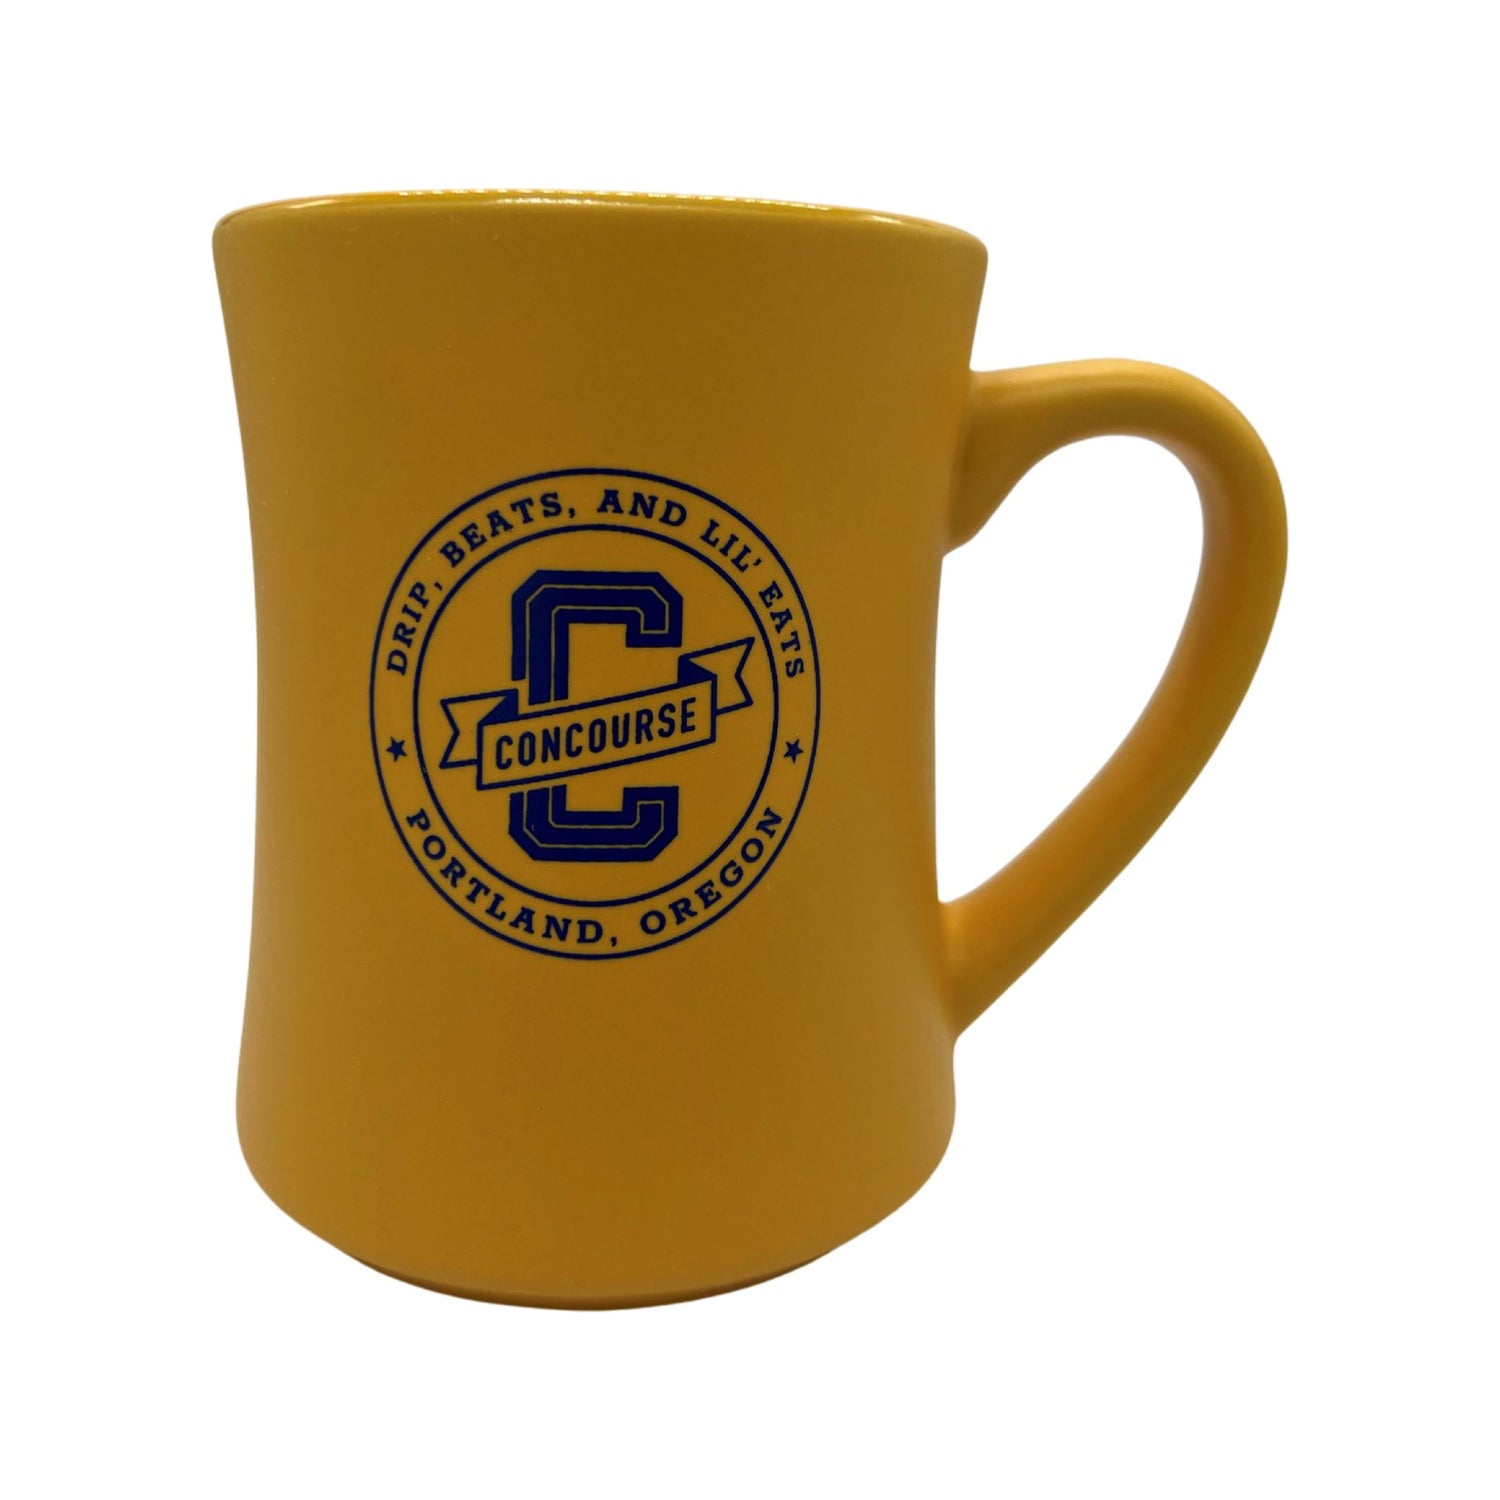 Concourse Coffee Yellow Mug